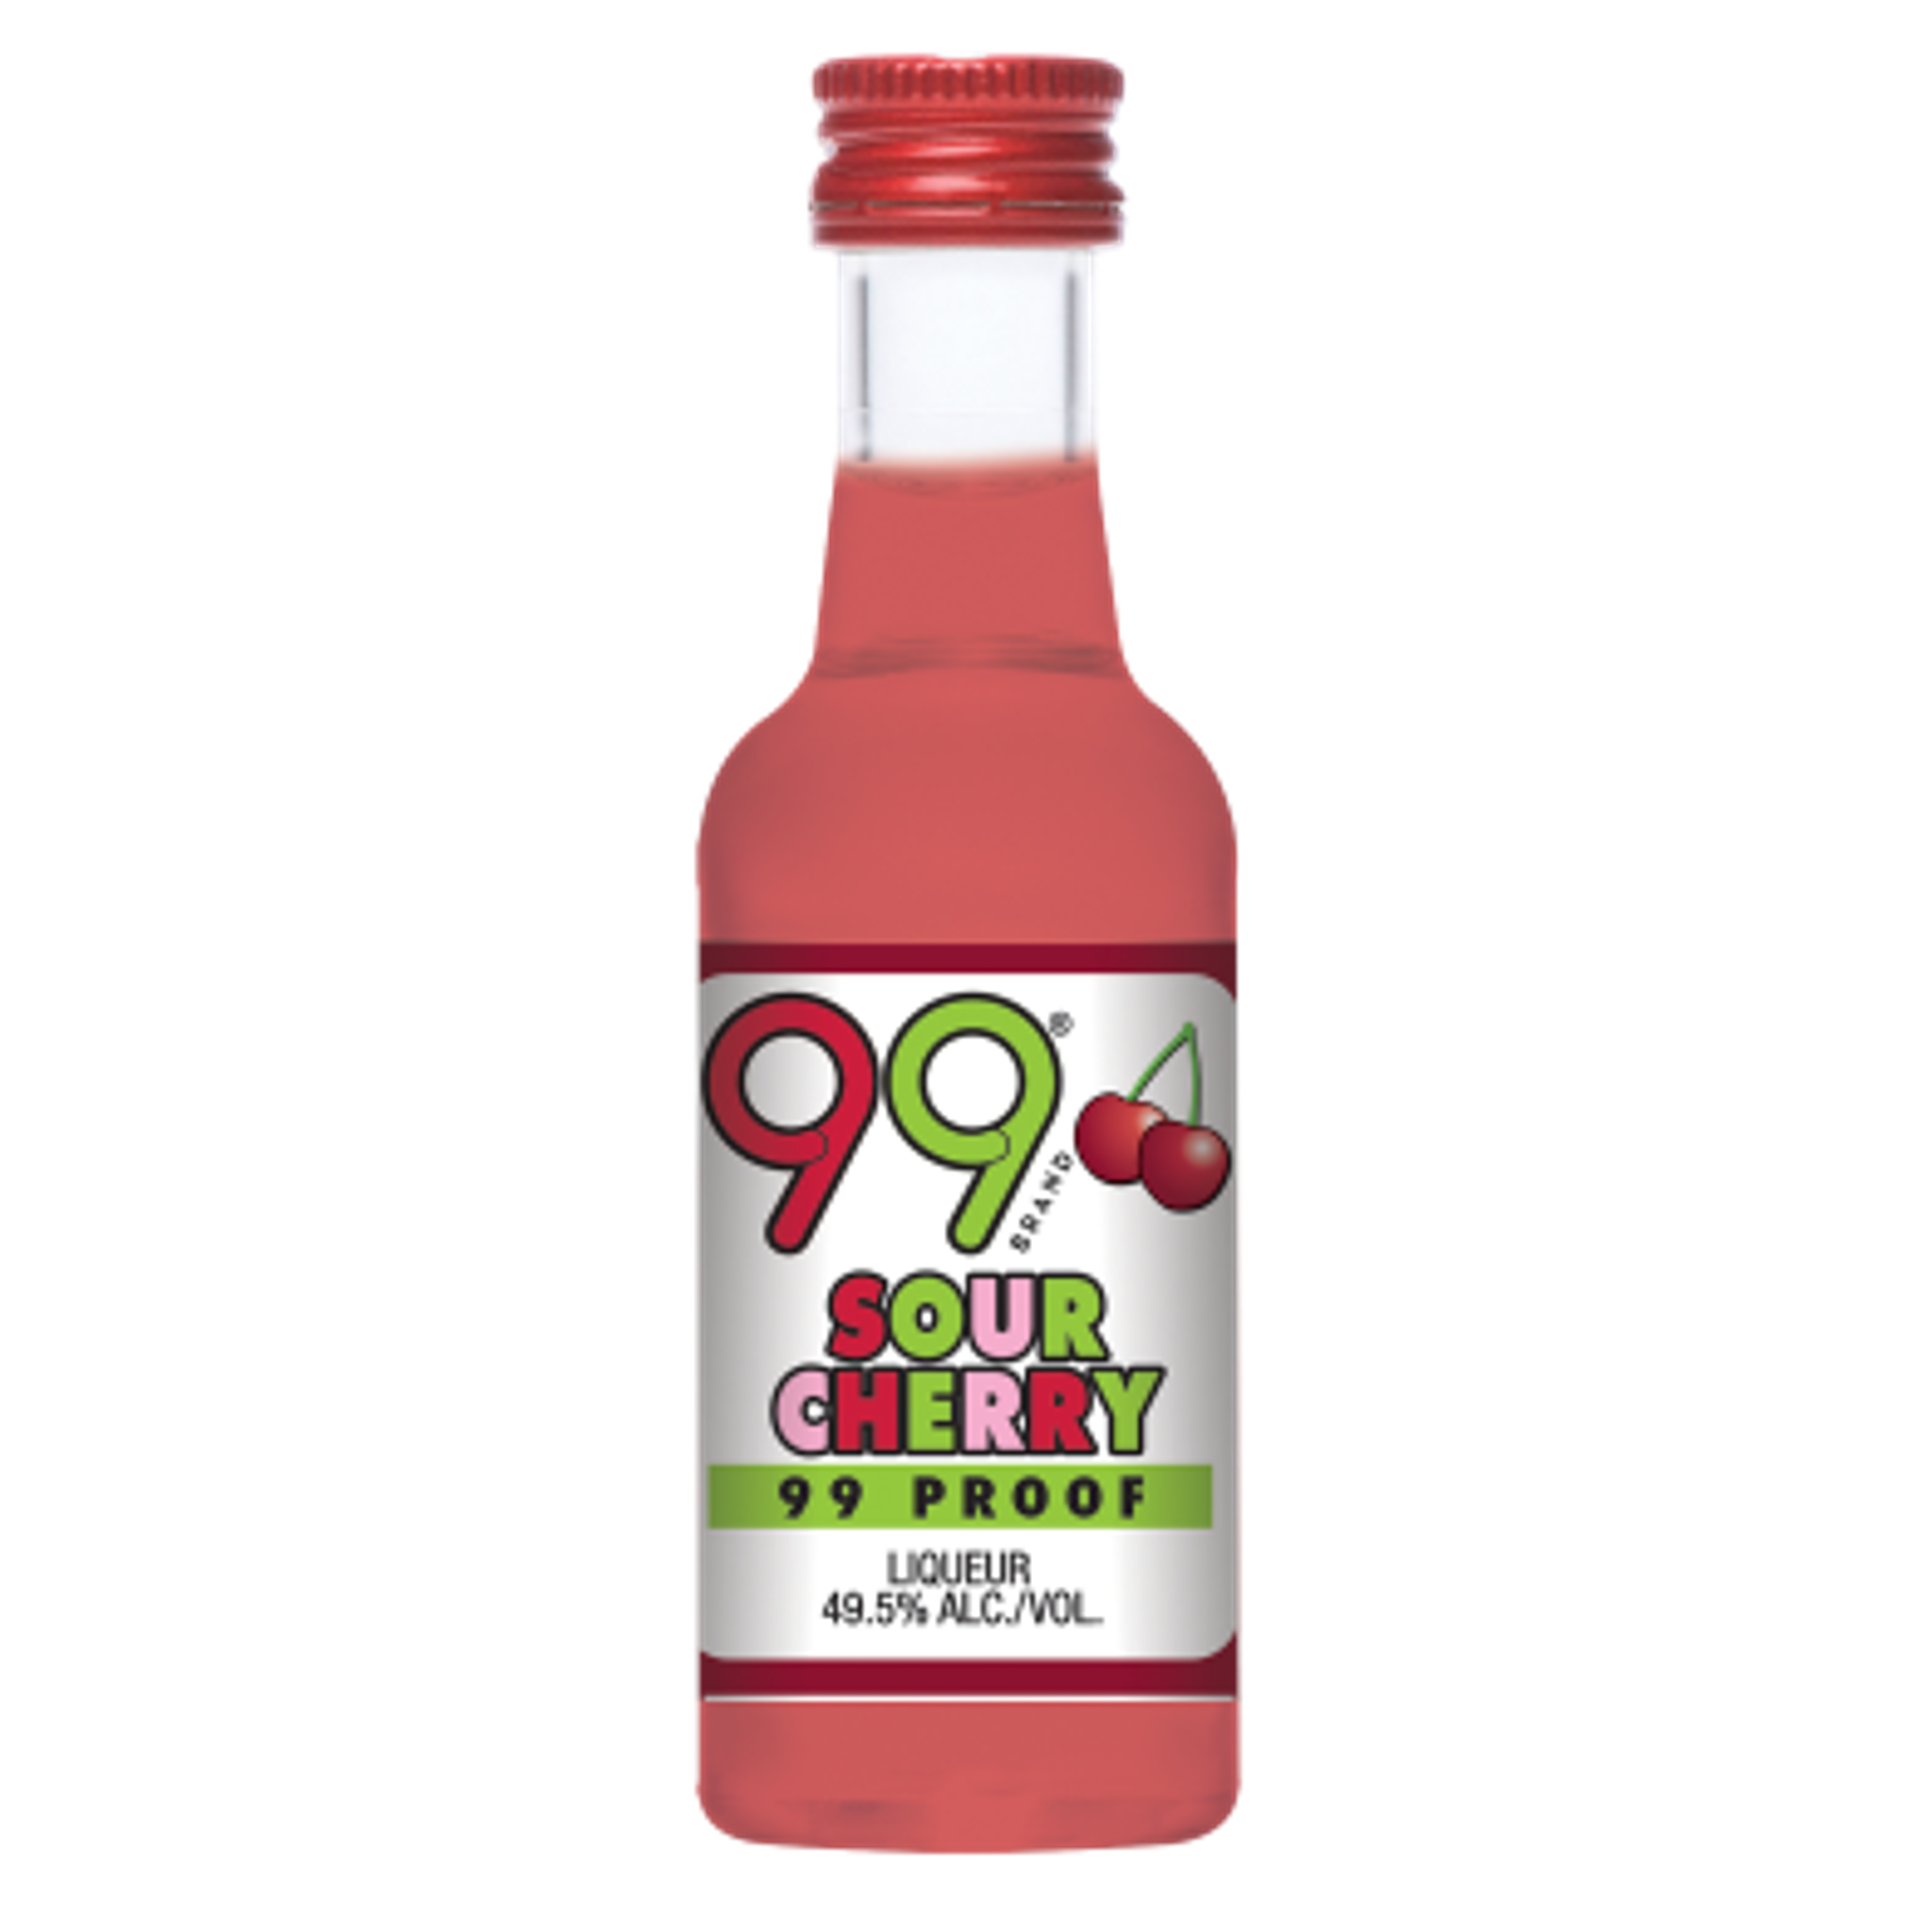 99 Brand Sour Cherry Liqueur (12x50ml)